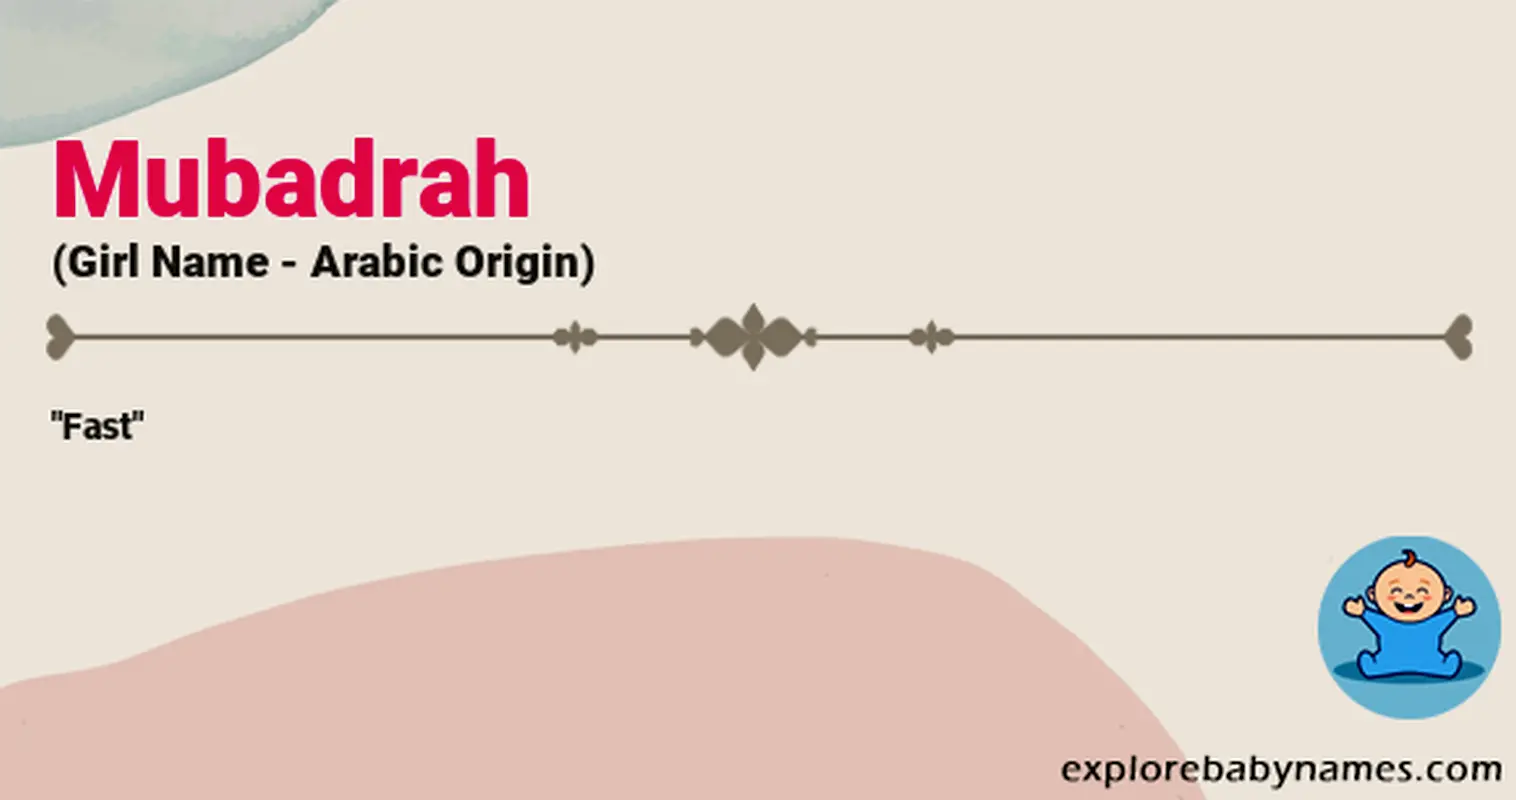 Meaning of Mubadrah